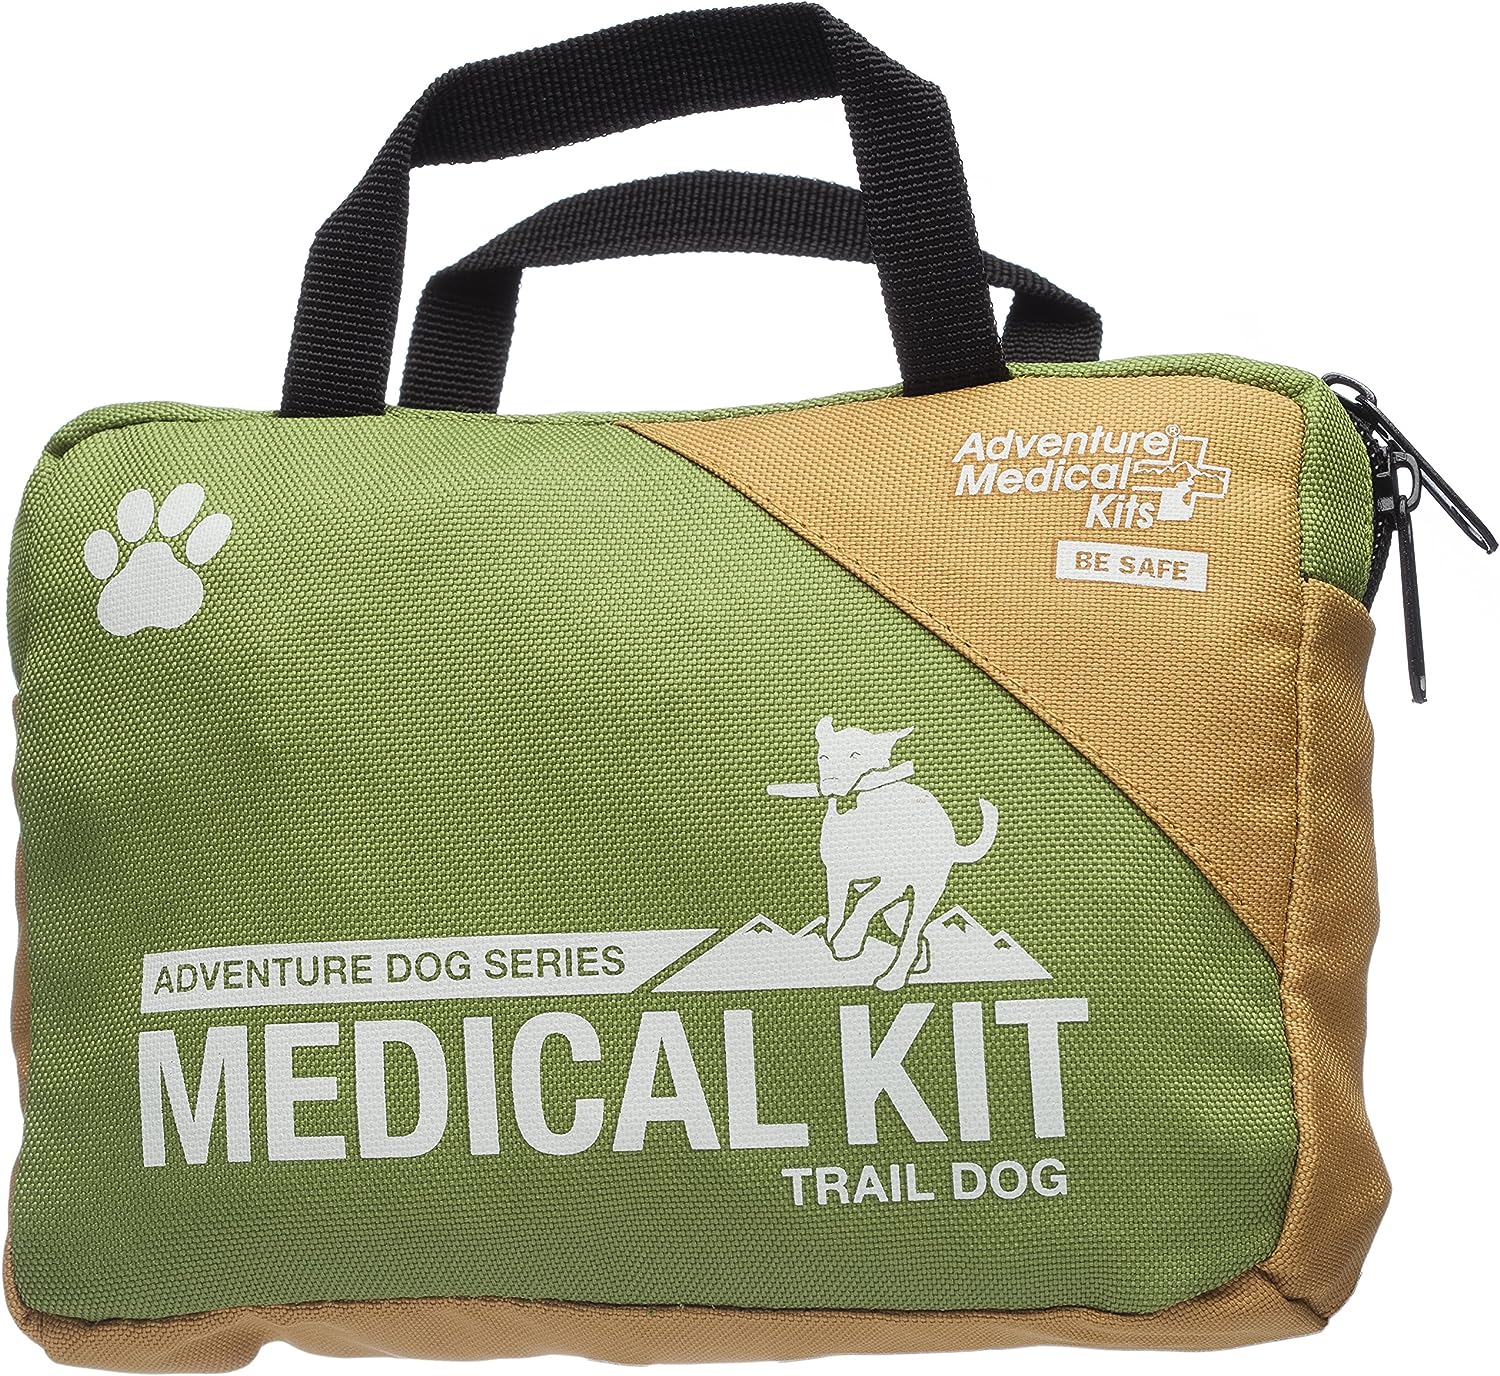 Adventure Medical Kits Adventure Dog Series Trail Dog First Aid Kit